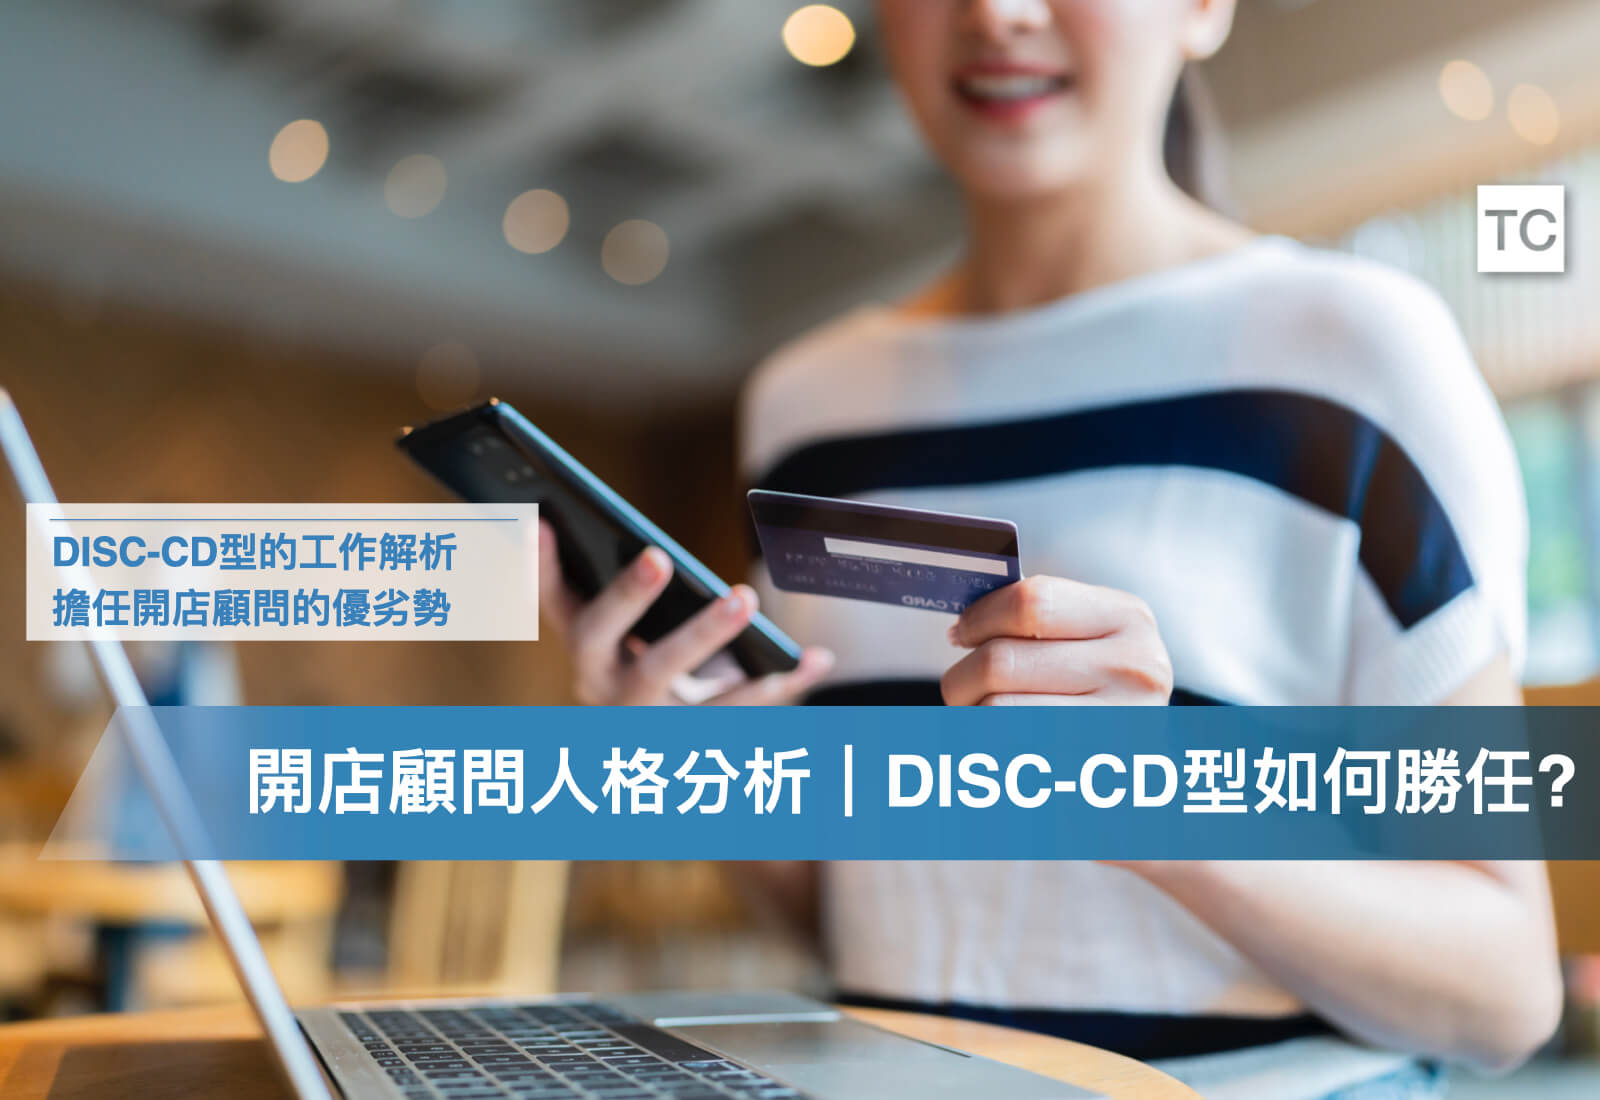 DISC-CD(貓頭鷹/老虎)型的開店顧問，該如何善用人格特質的優勢，做好實習/工作內容?